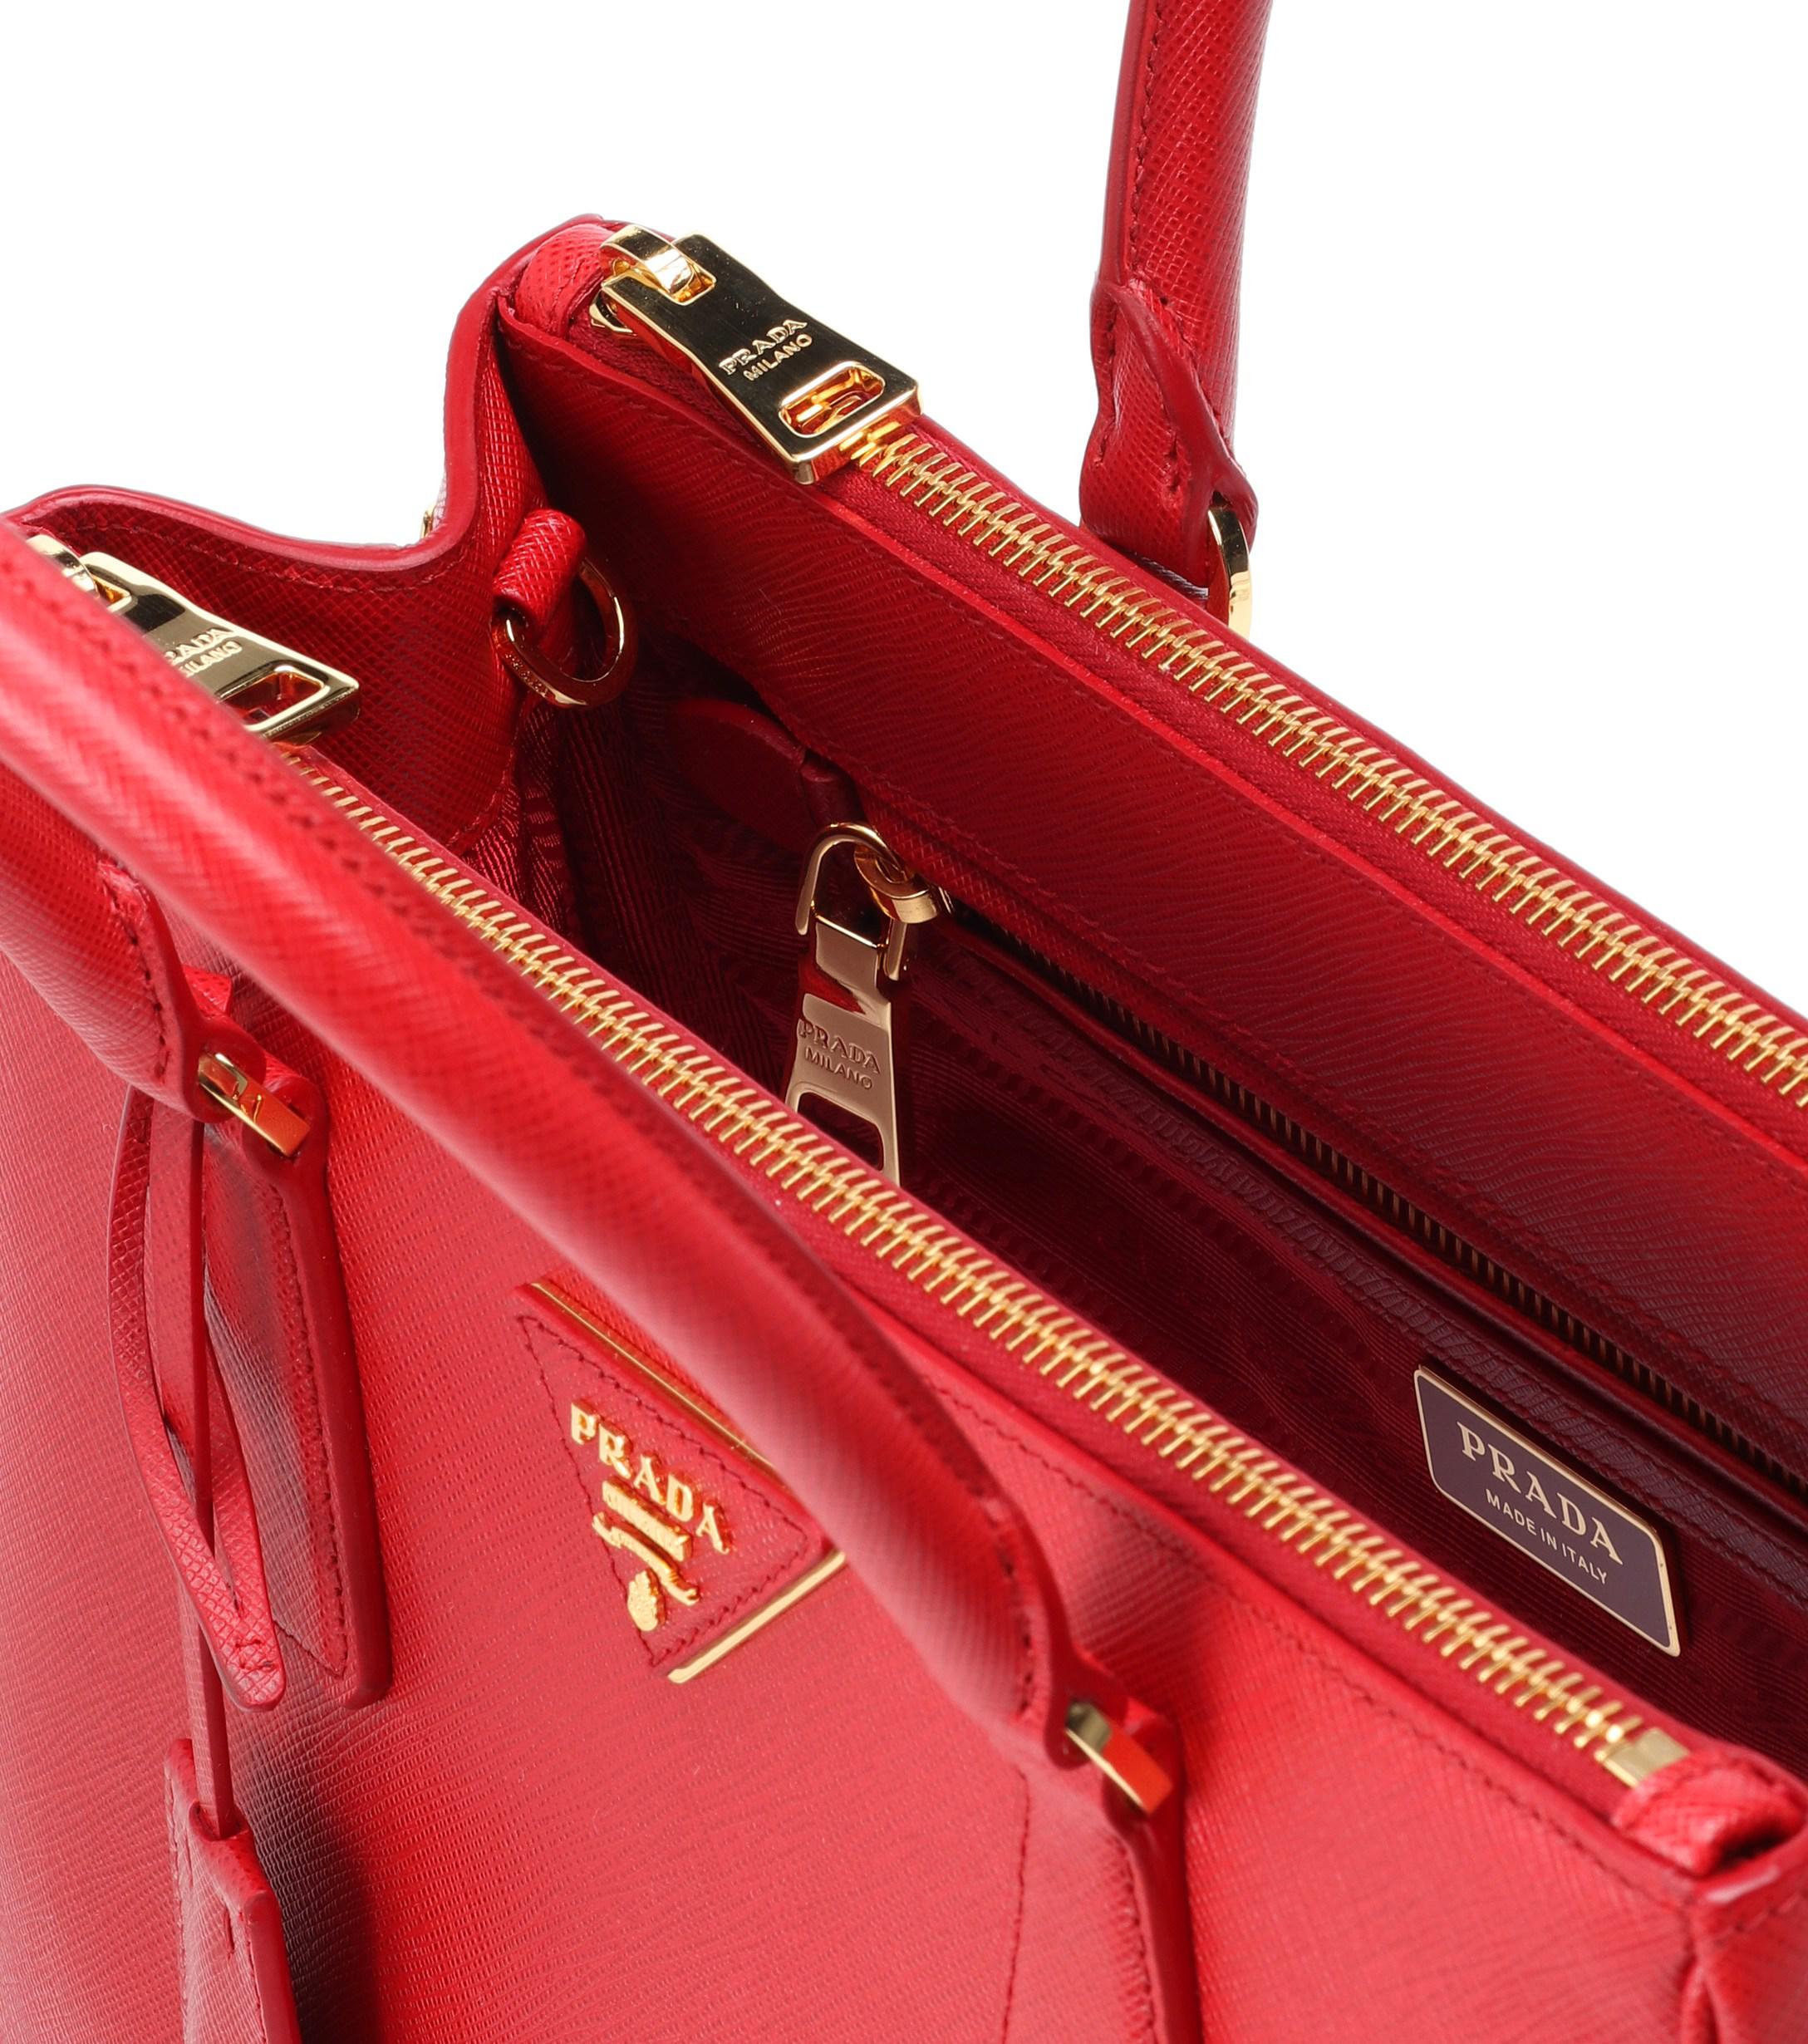 Prada Galleria Saffiano Small Leather Shoulder Bag in Red | Lyst